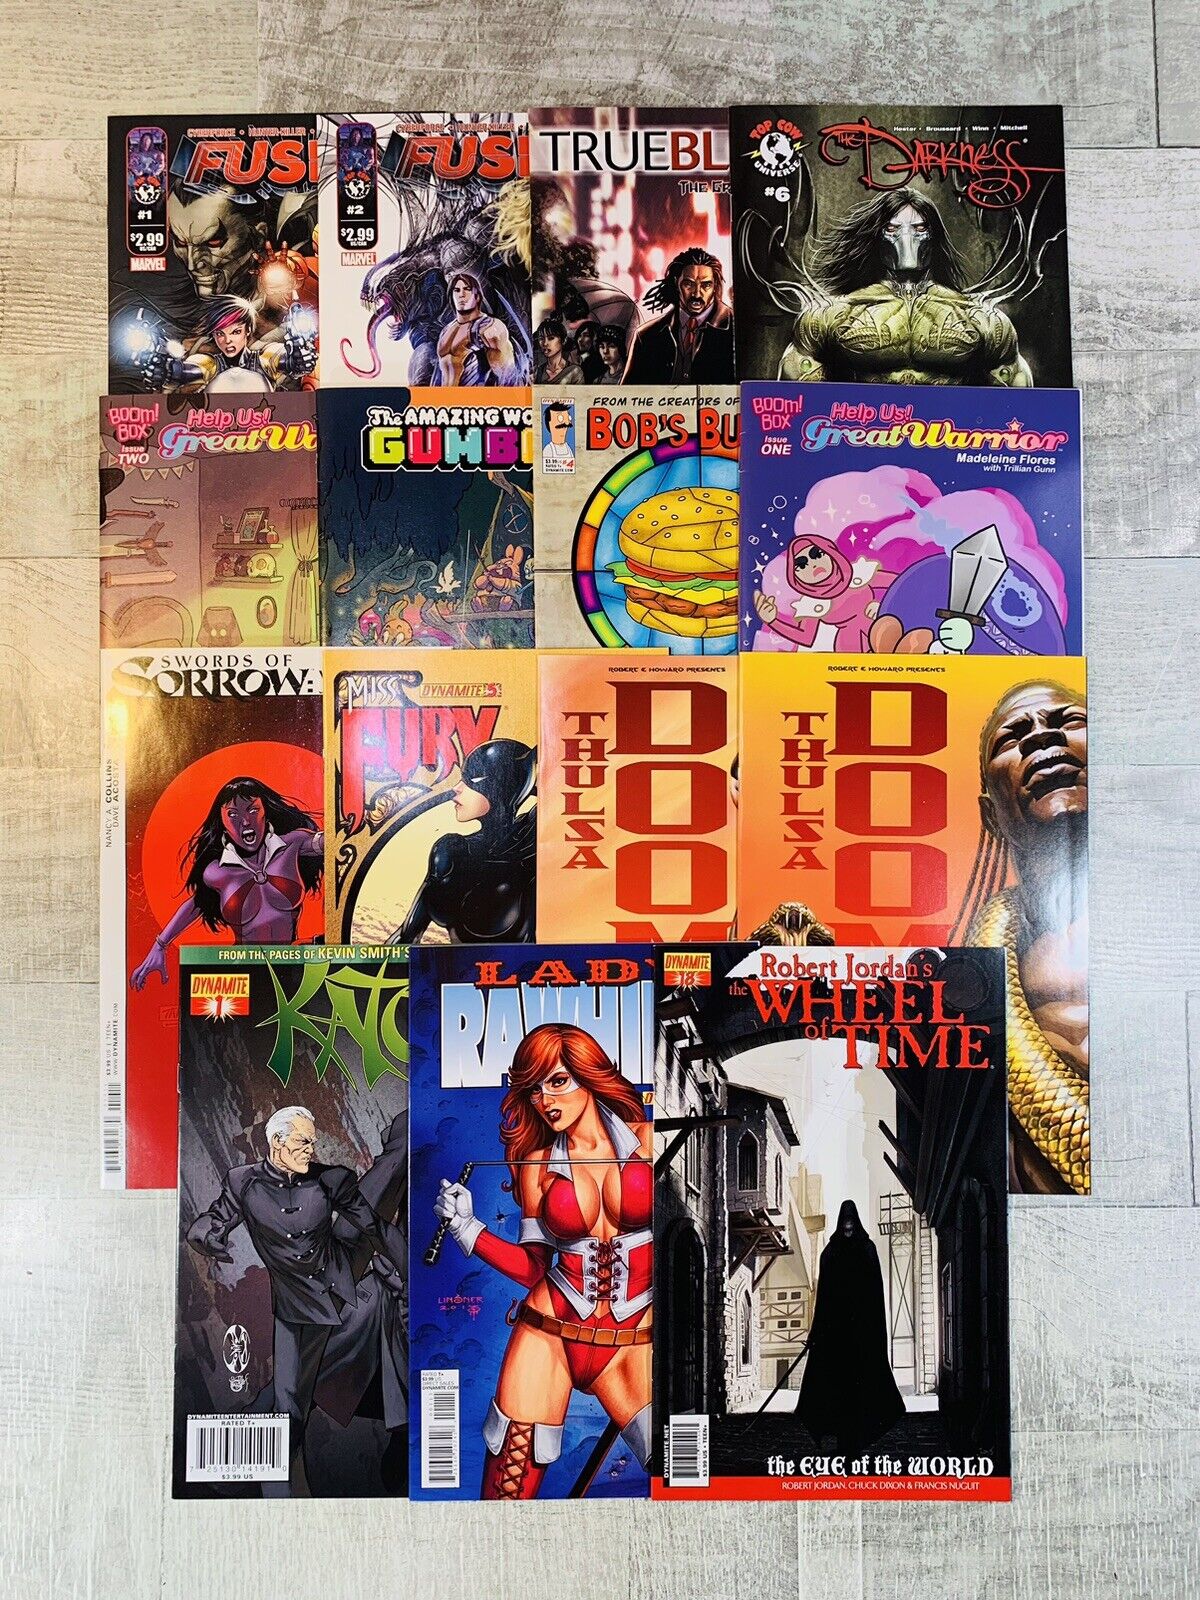 Mixed Lot of 15 Independent & Small Press Comic Books Various Topics